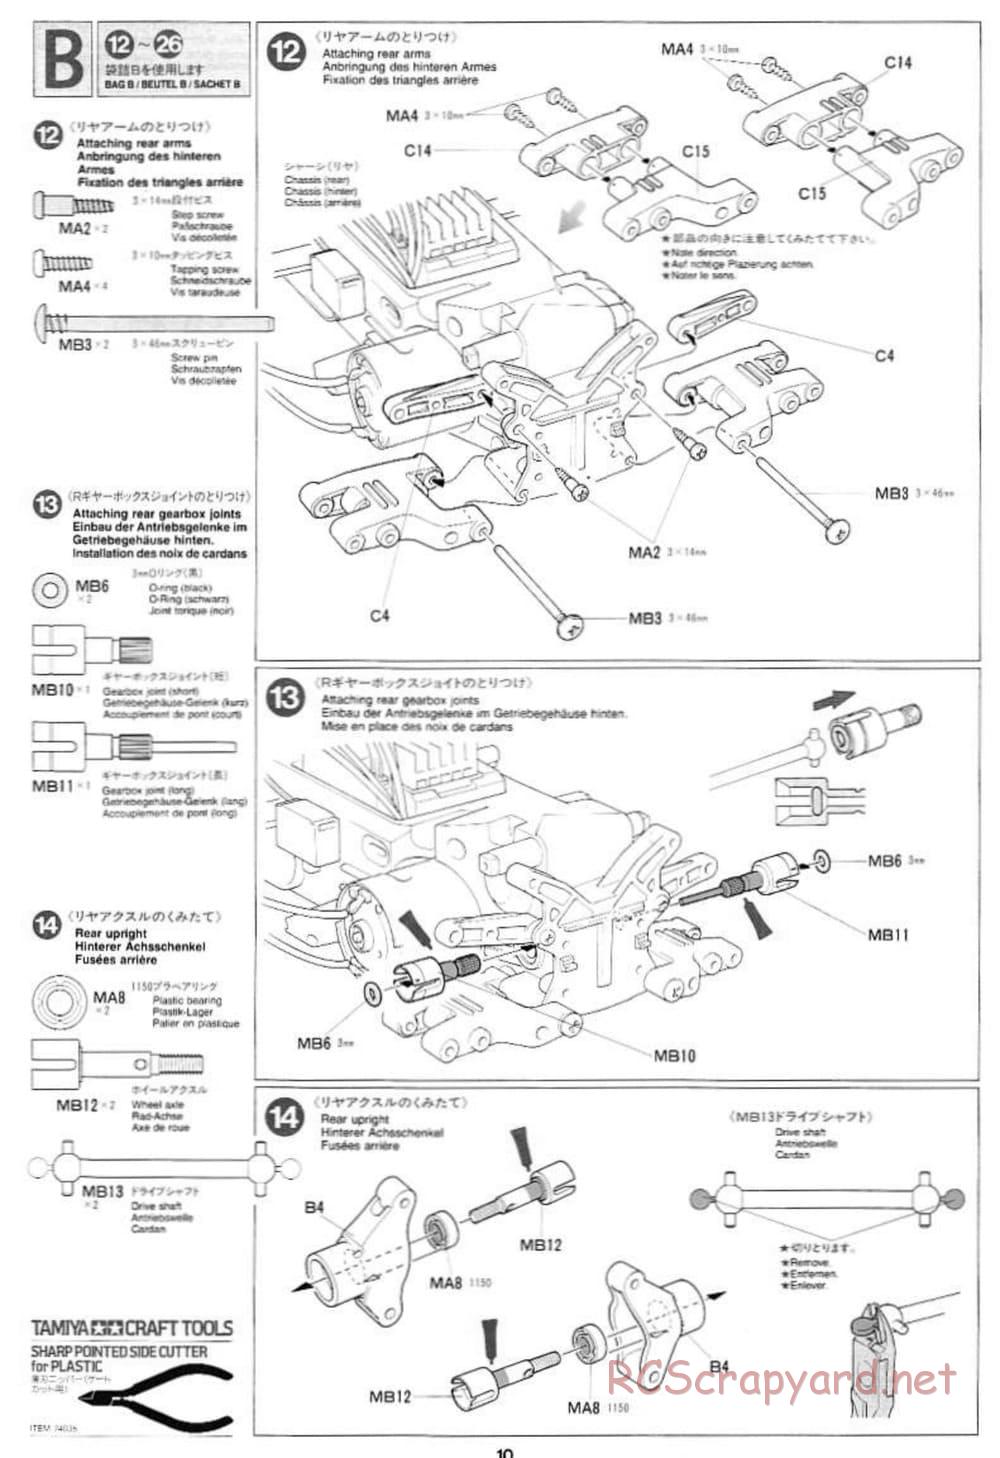 Tamiya - Ford Escort WRC - TL-01 Chassis - Manual - Page 10